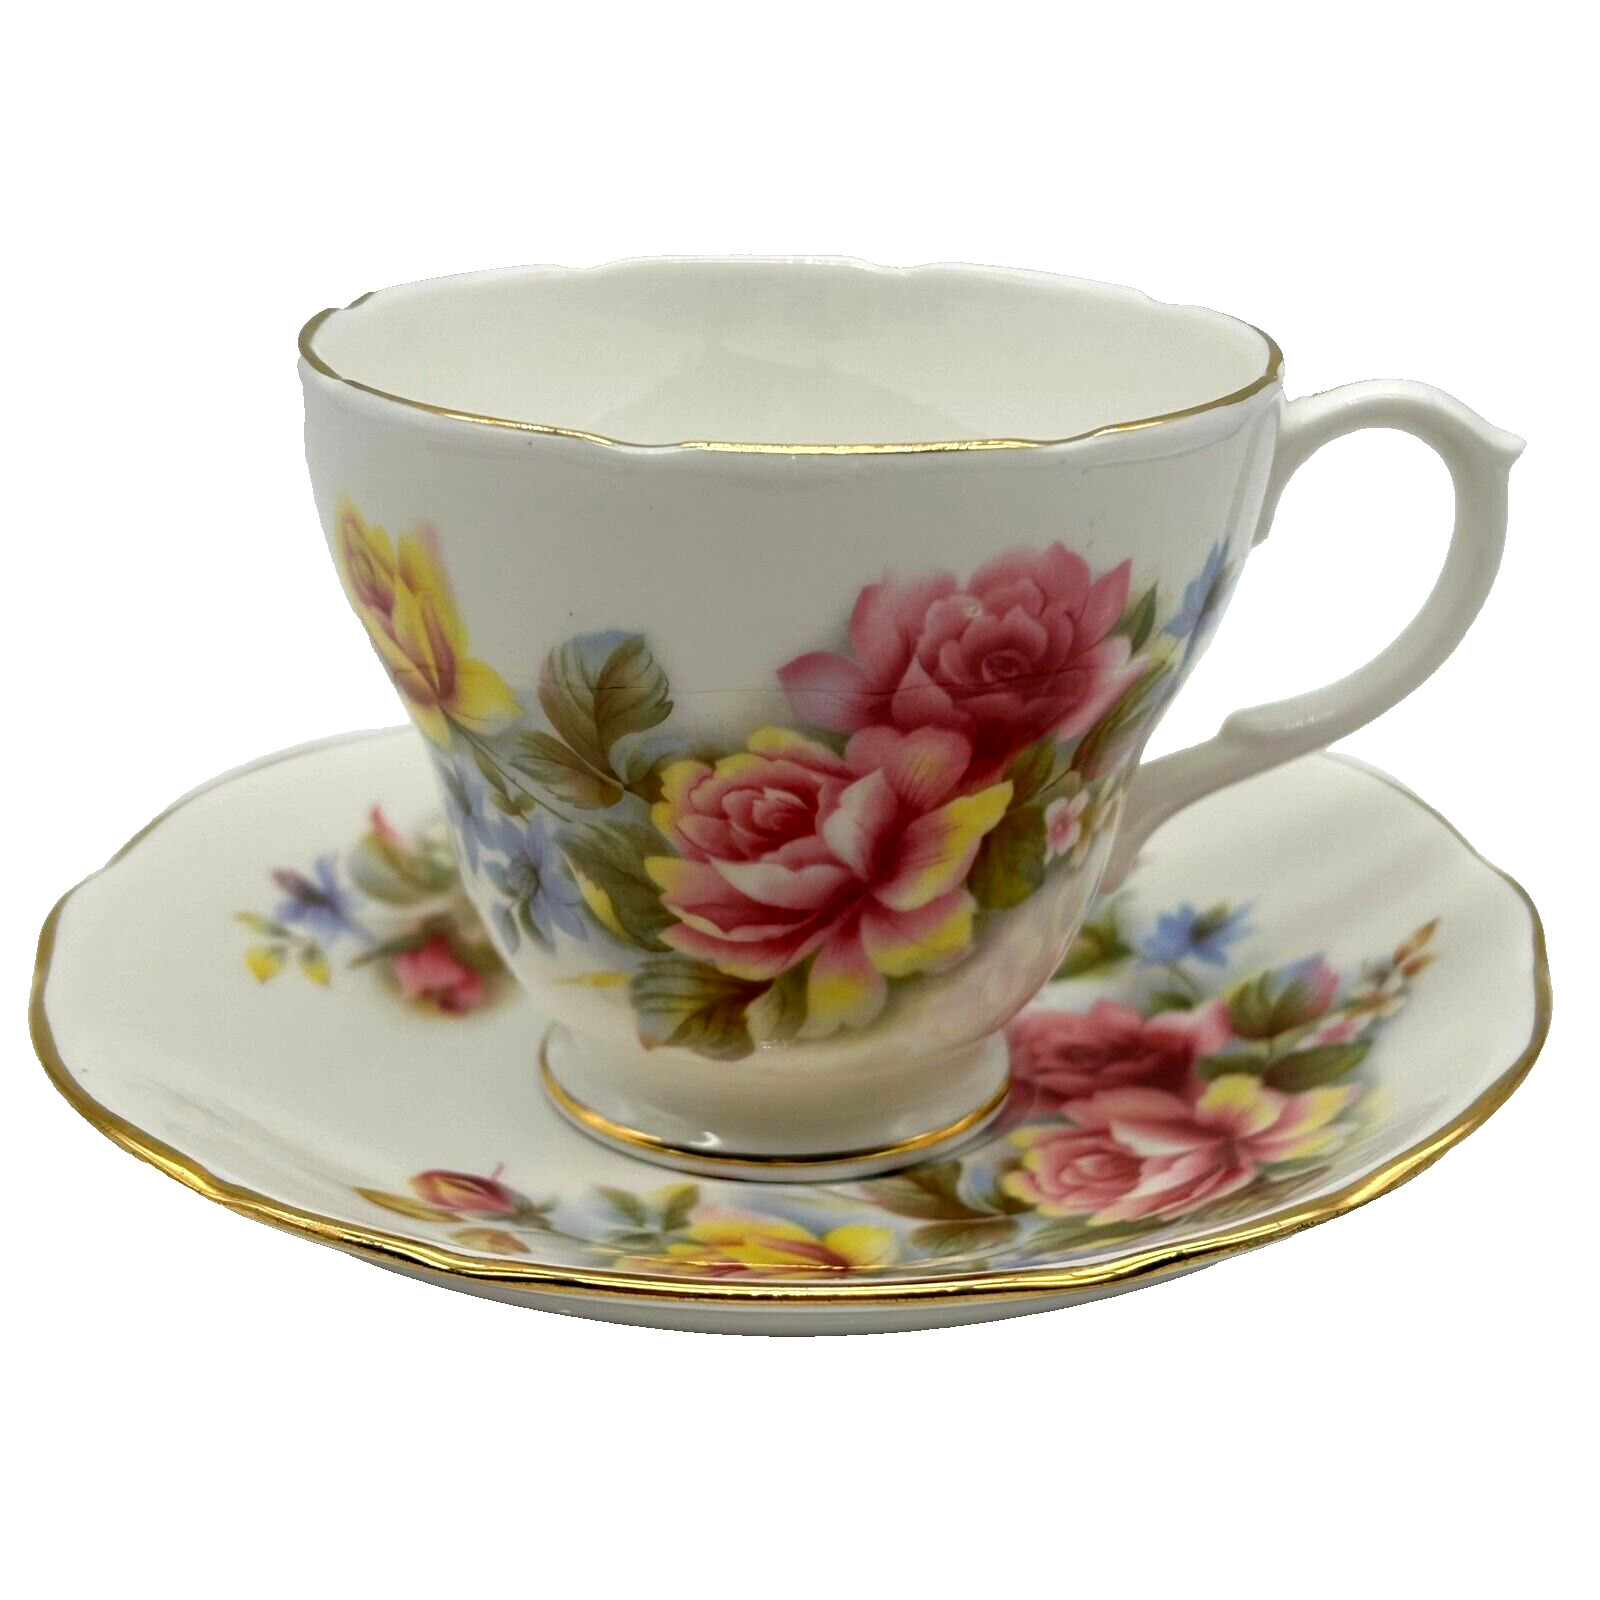 Duchess Bone China Multicolor Roses Floral Teacup & Saucer Set Gold Trim England